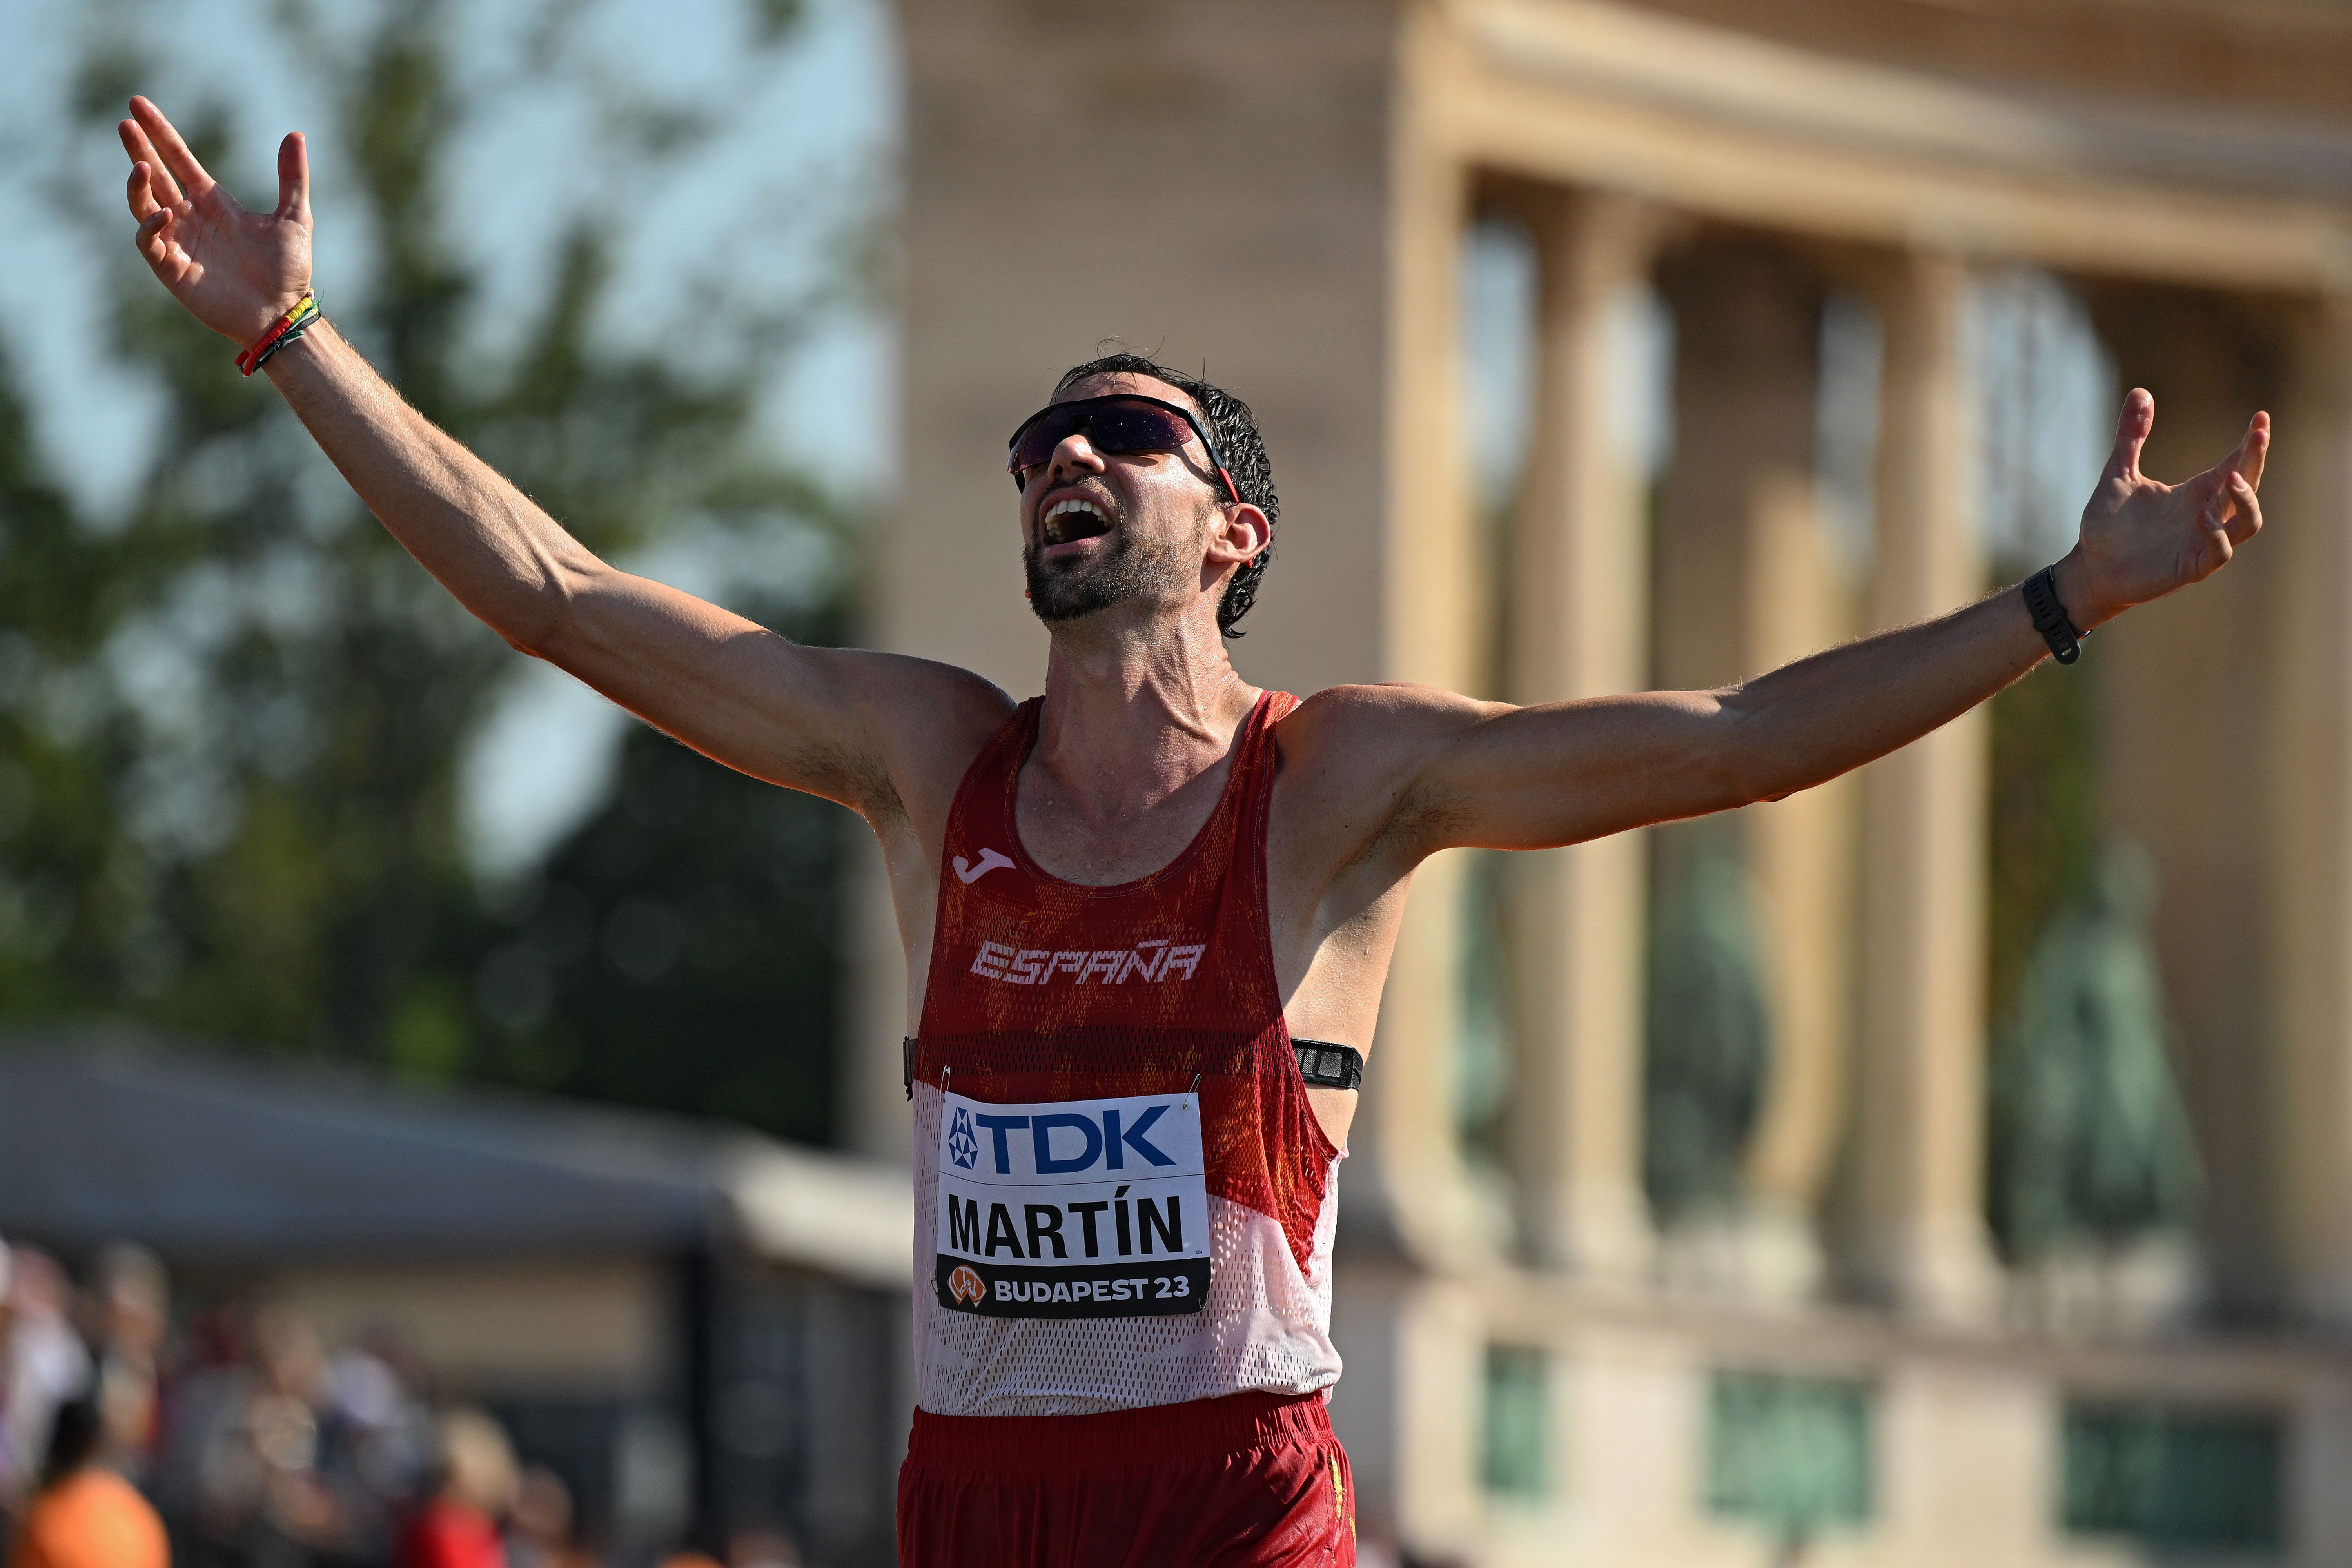 Alvaro Martin wins the 35km race walk at the World Athletics Championships Budapest 23